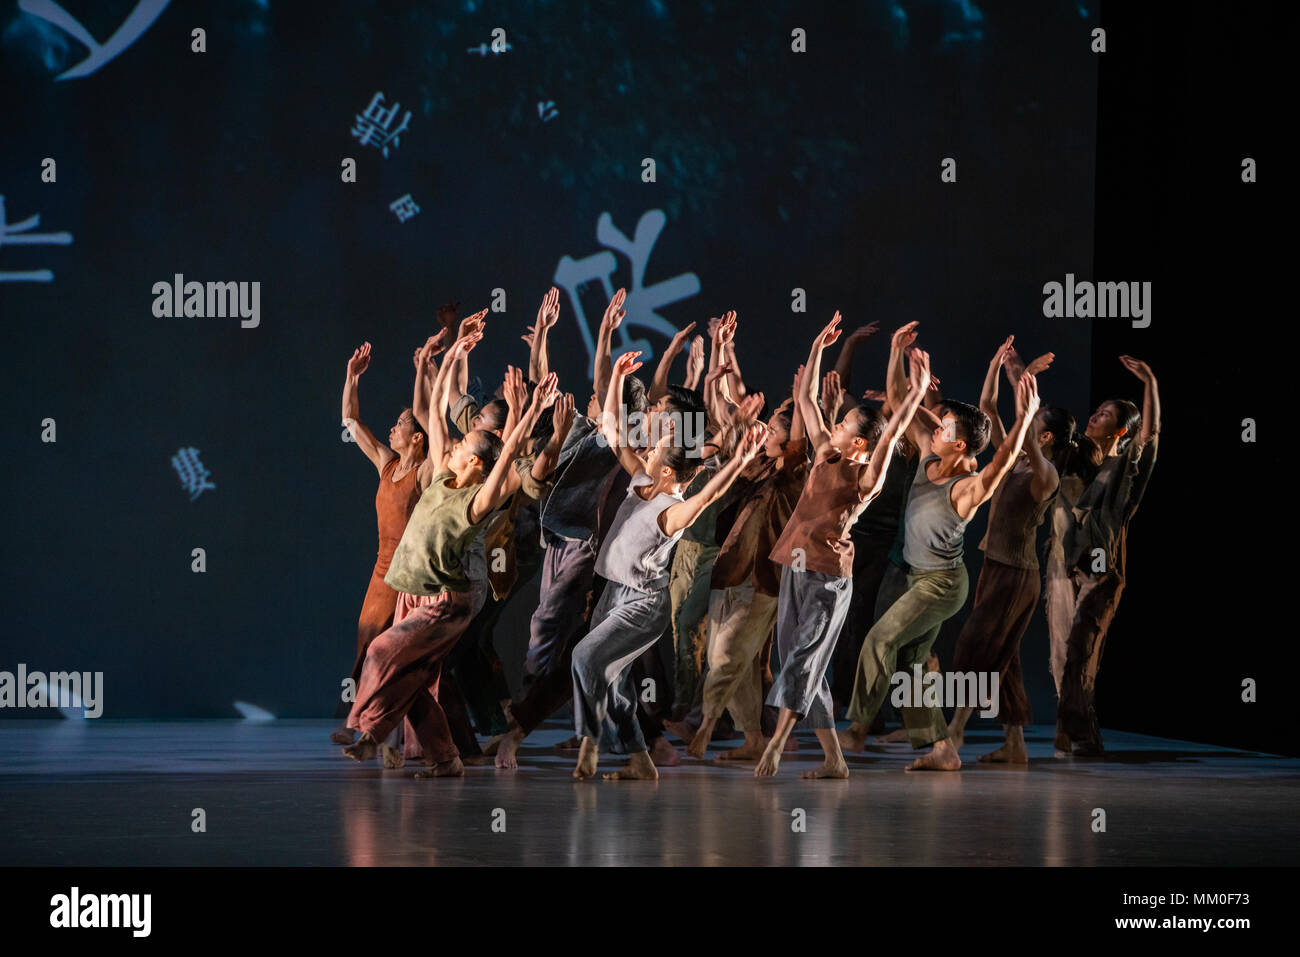 London, Großbritannien - 9. Mai 2018 - Cloud Dance Theatre aus Taiwan vorhanden Formosa in Sadler's Wells Foto © Danilo Moroni Credit: Danilo Moroni/Alamy leben Nachrichten Stockfoto